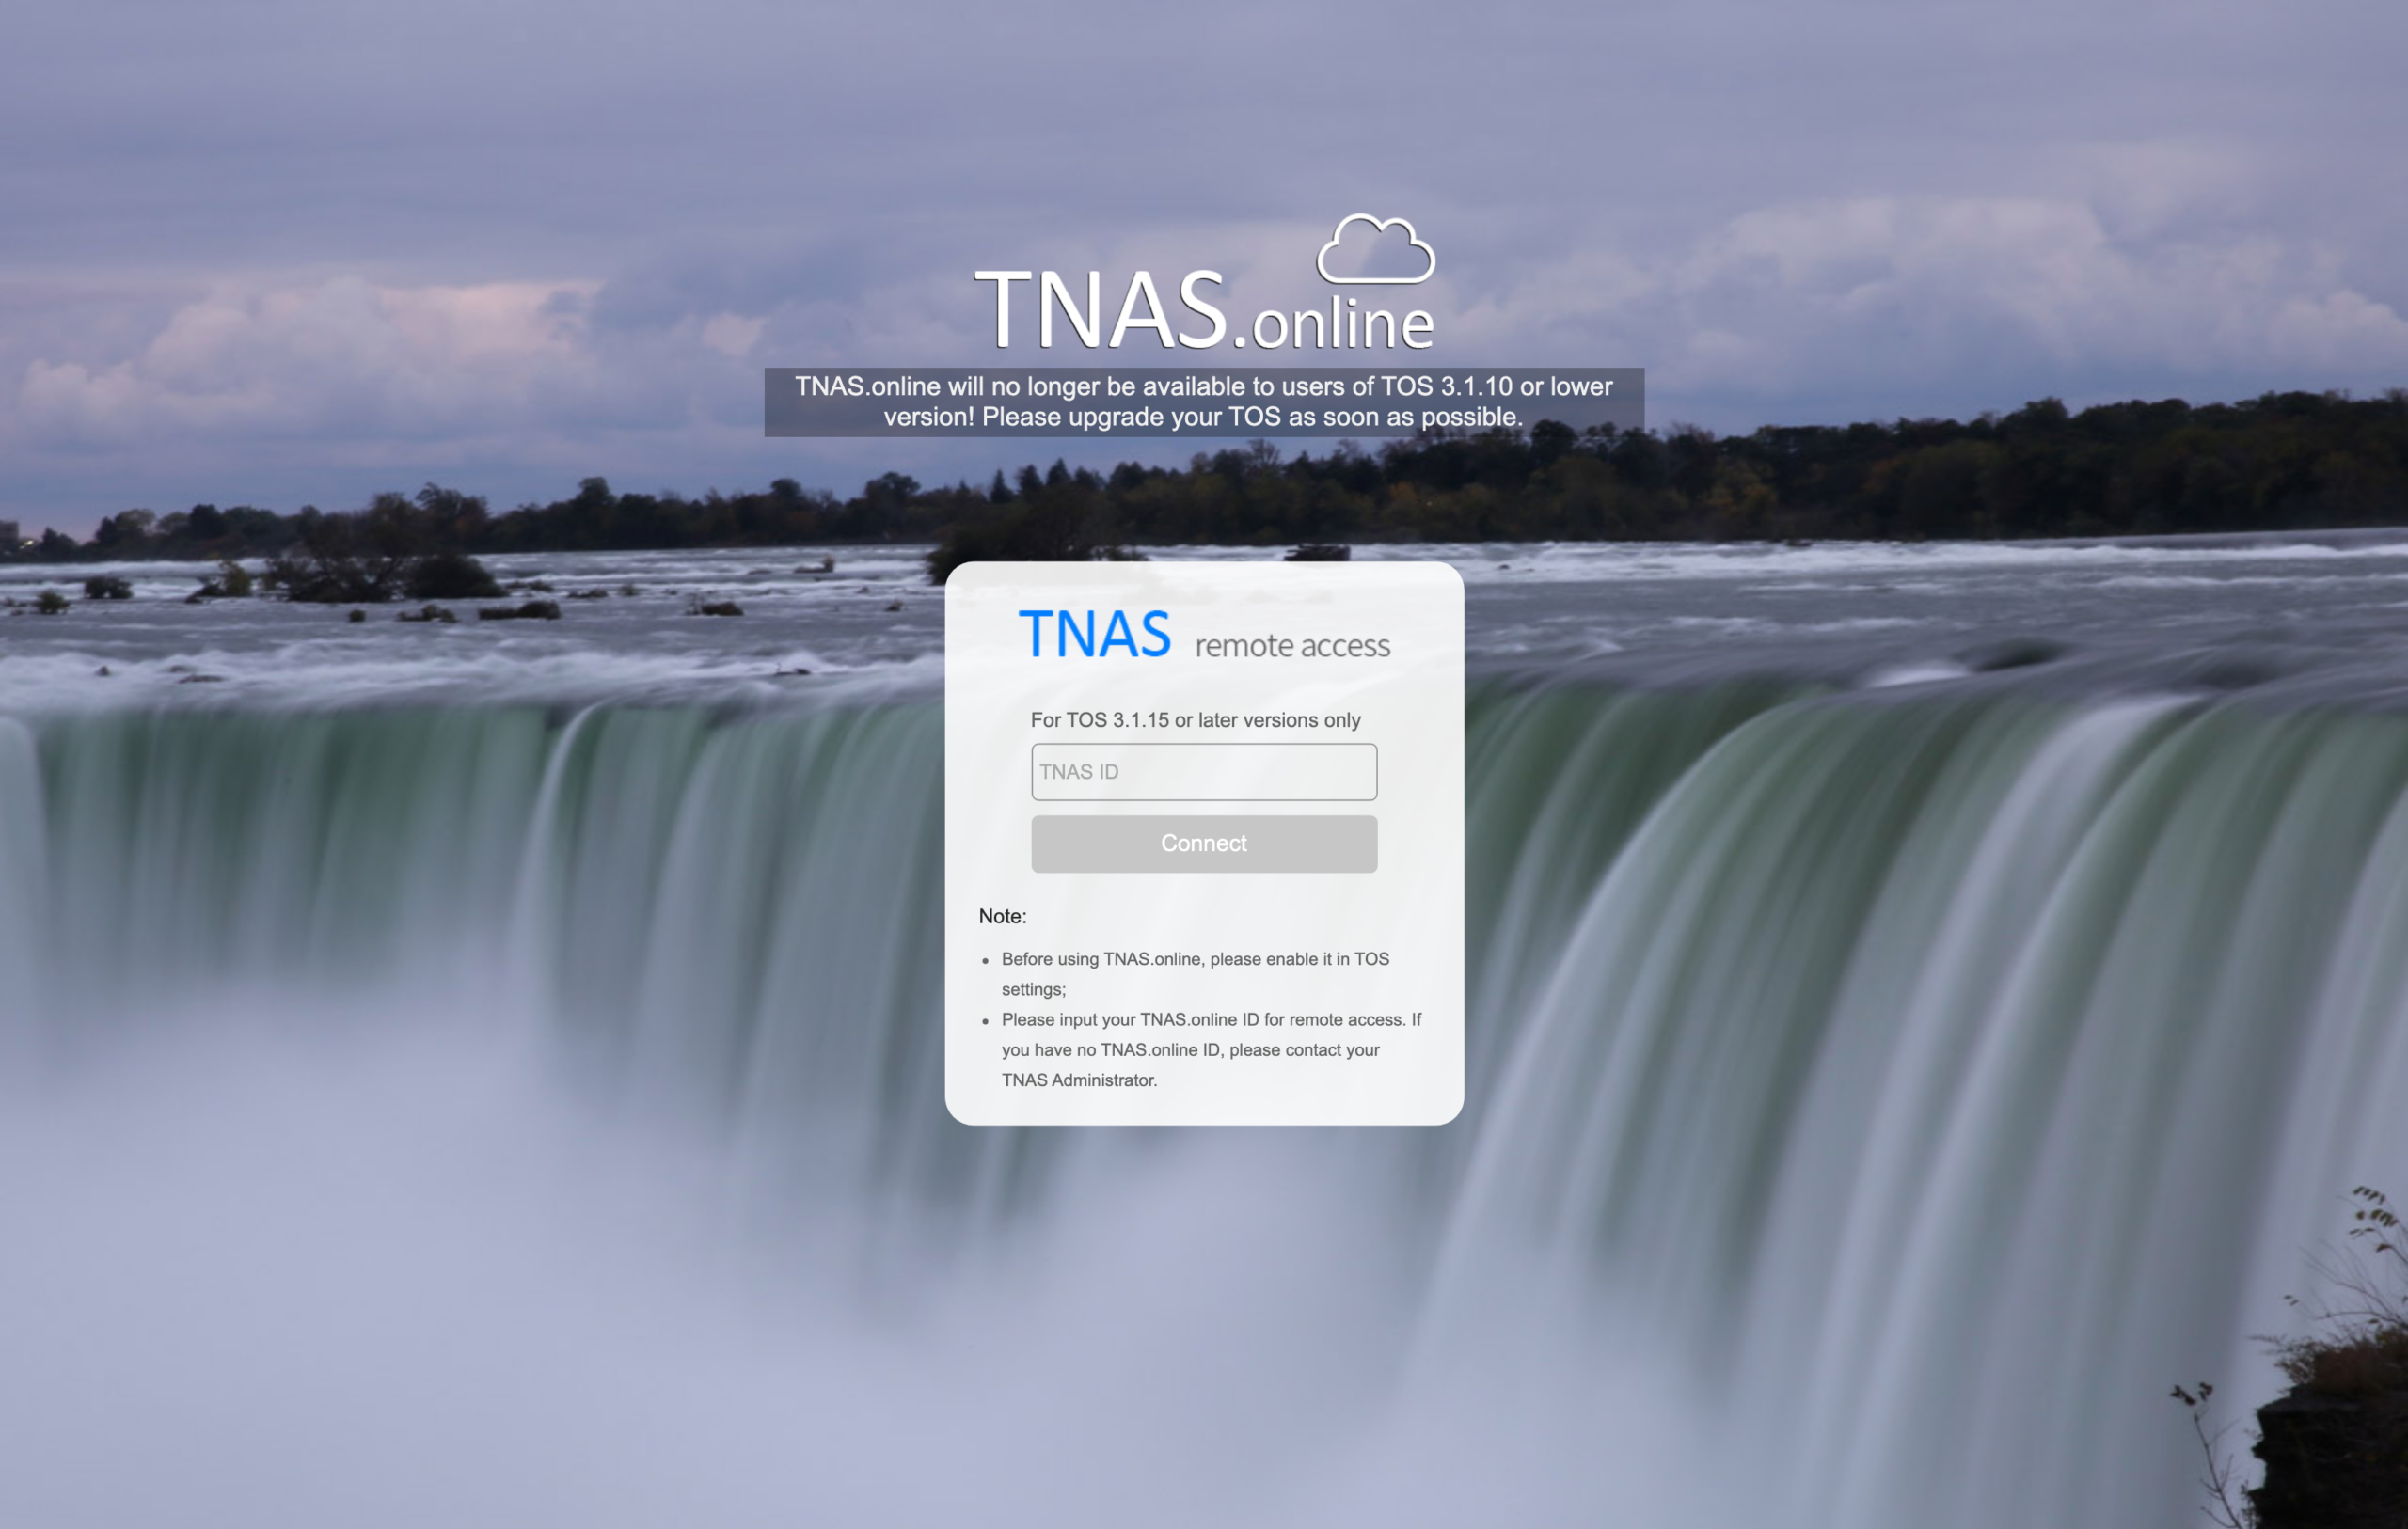 TNAS.online